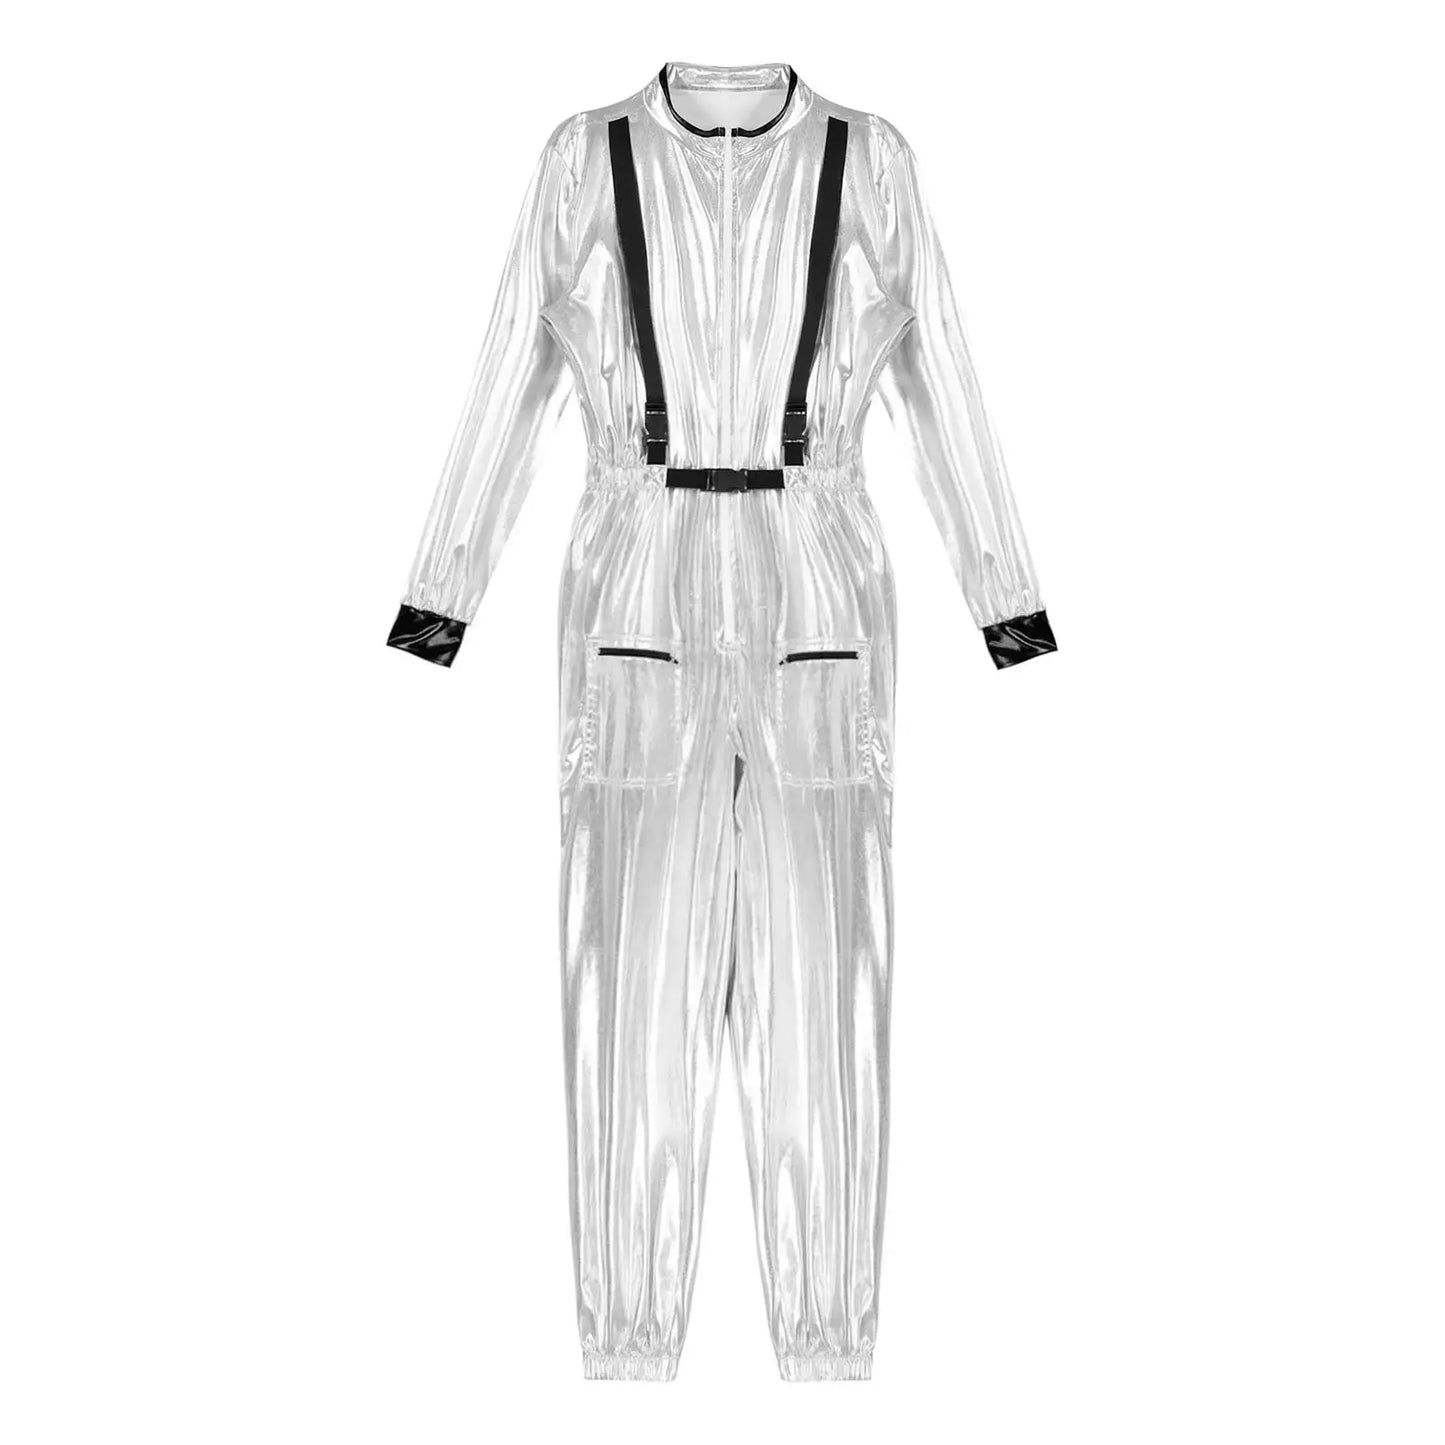 Women Halloween Carnival Astronaut Cosplay Costume Long Sleeve Metallic Shiny Zipper Jumpsuit Bodysuit Performance Clubwear